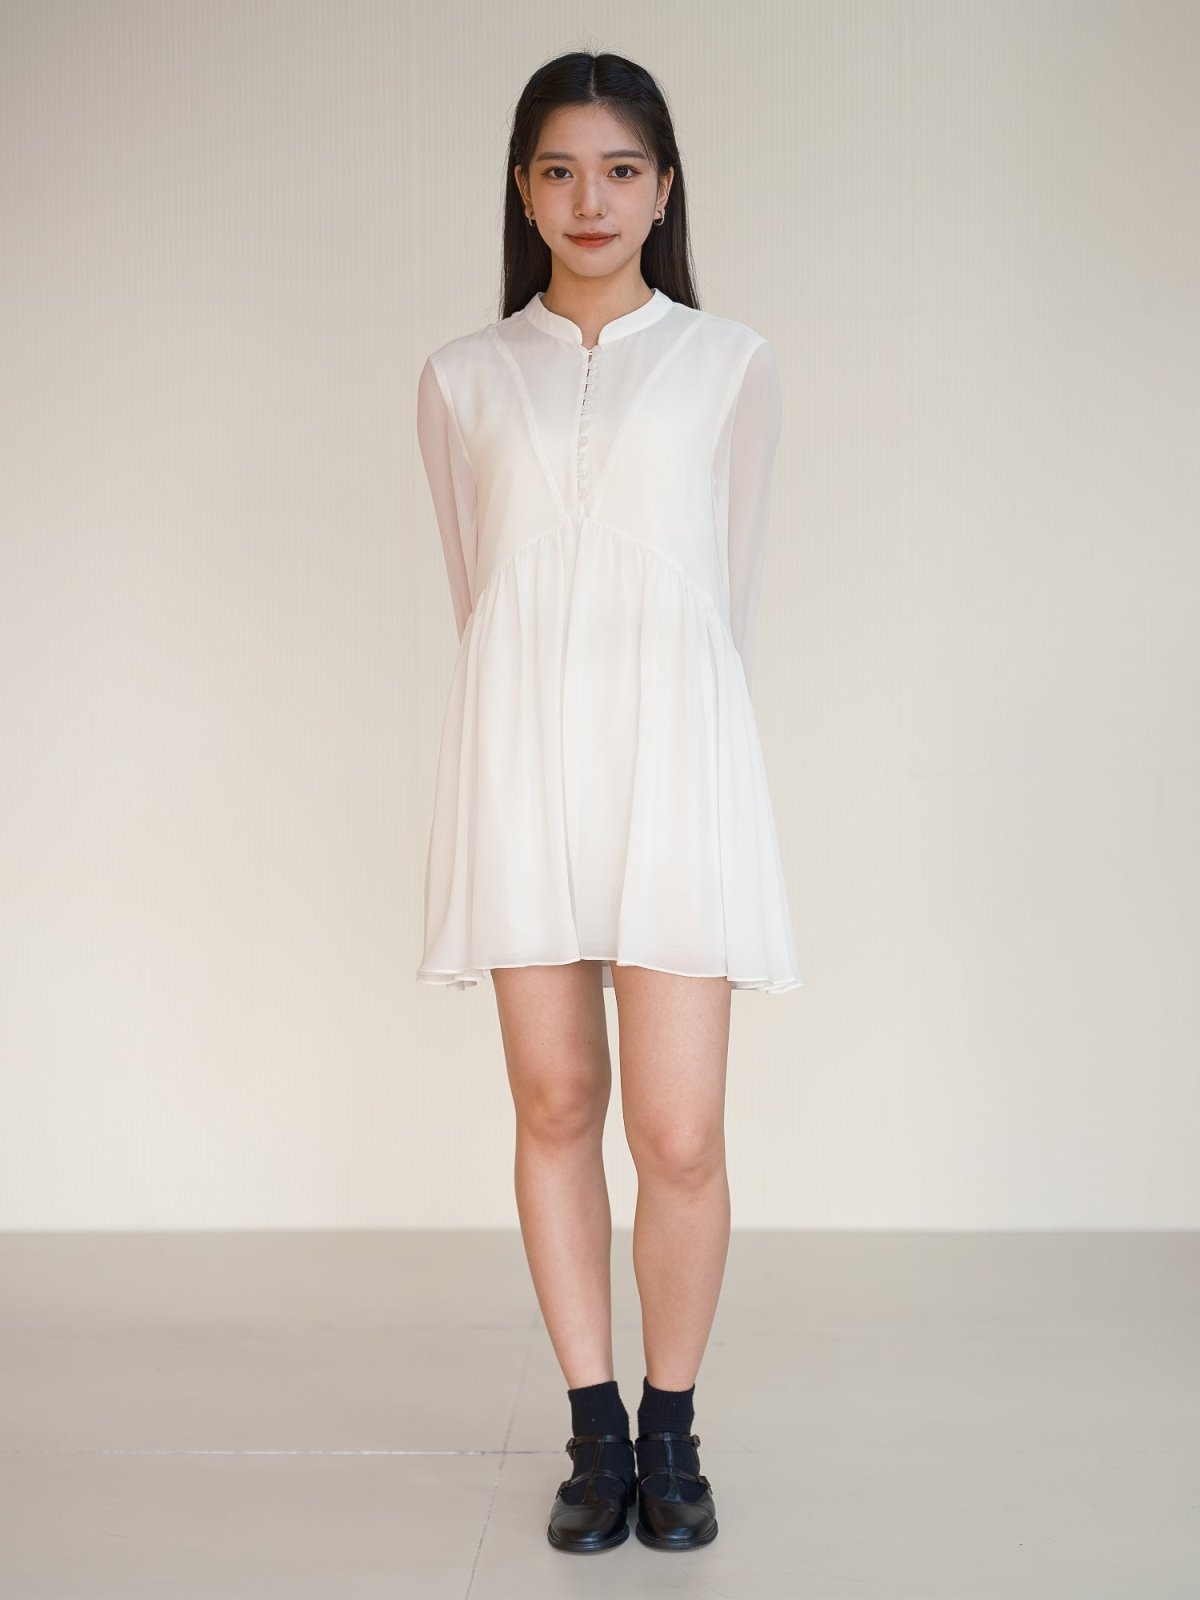 Button Front Mini Dress - DAG-DD7845-21lvoryS - Mochi Ivory - S - D'ZAGE Designs